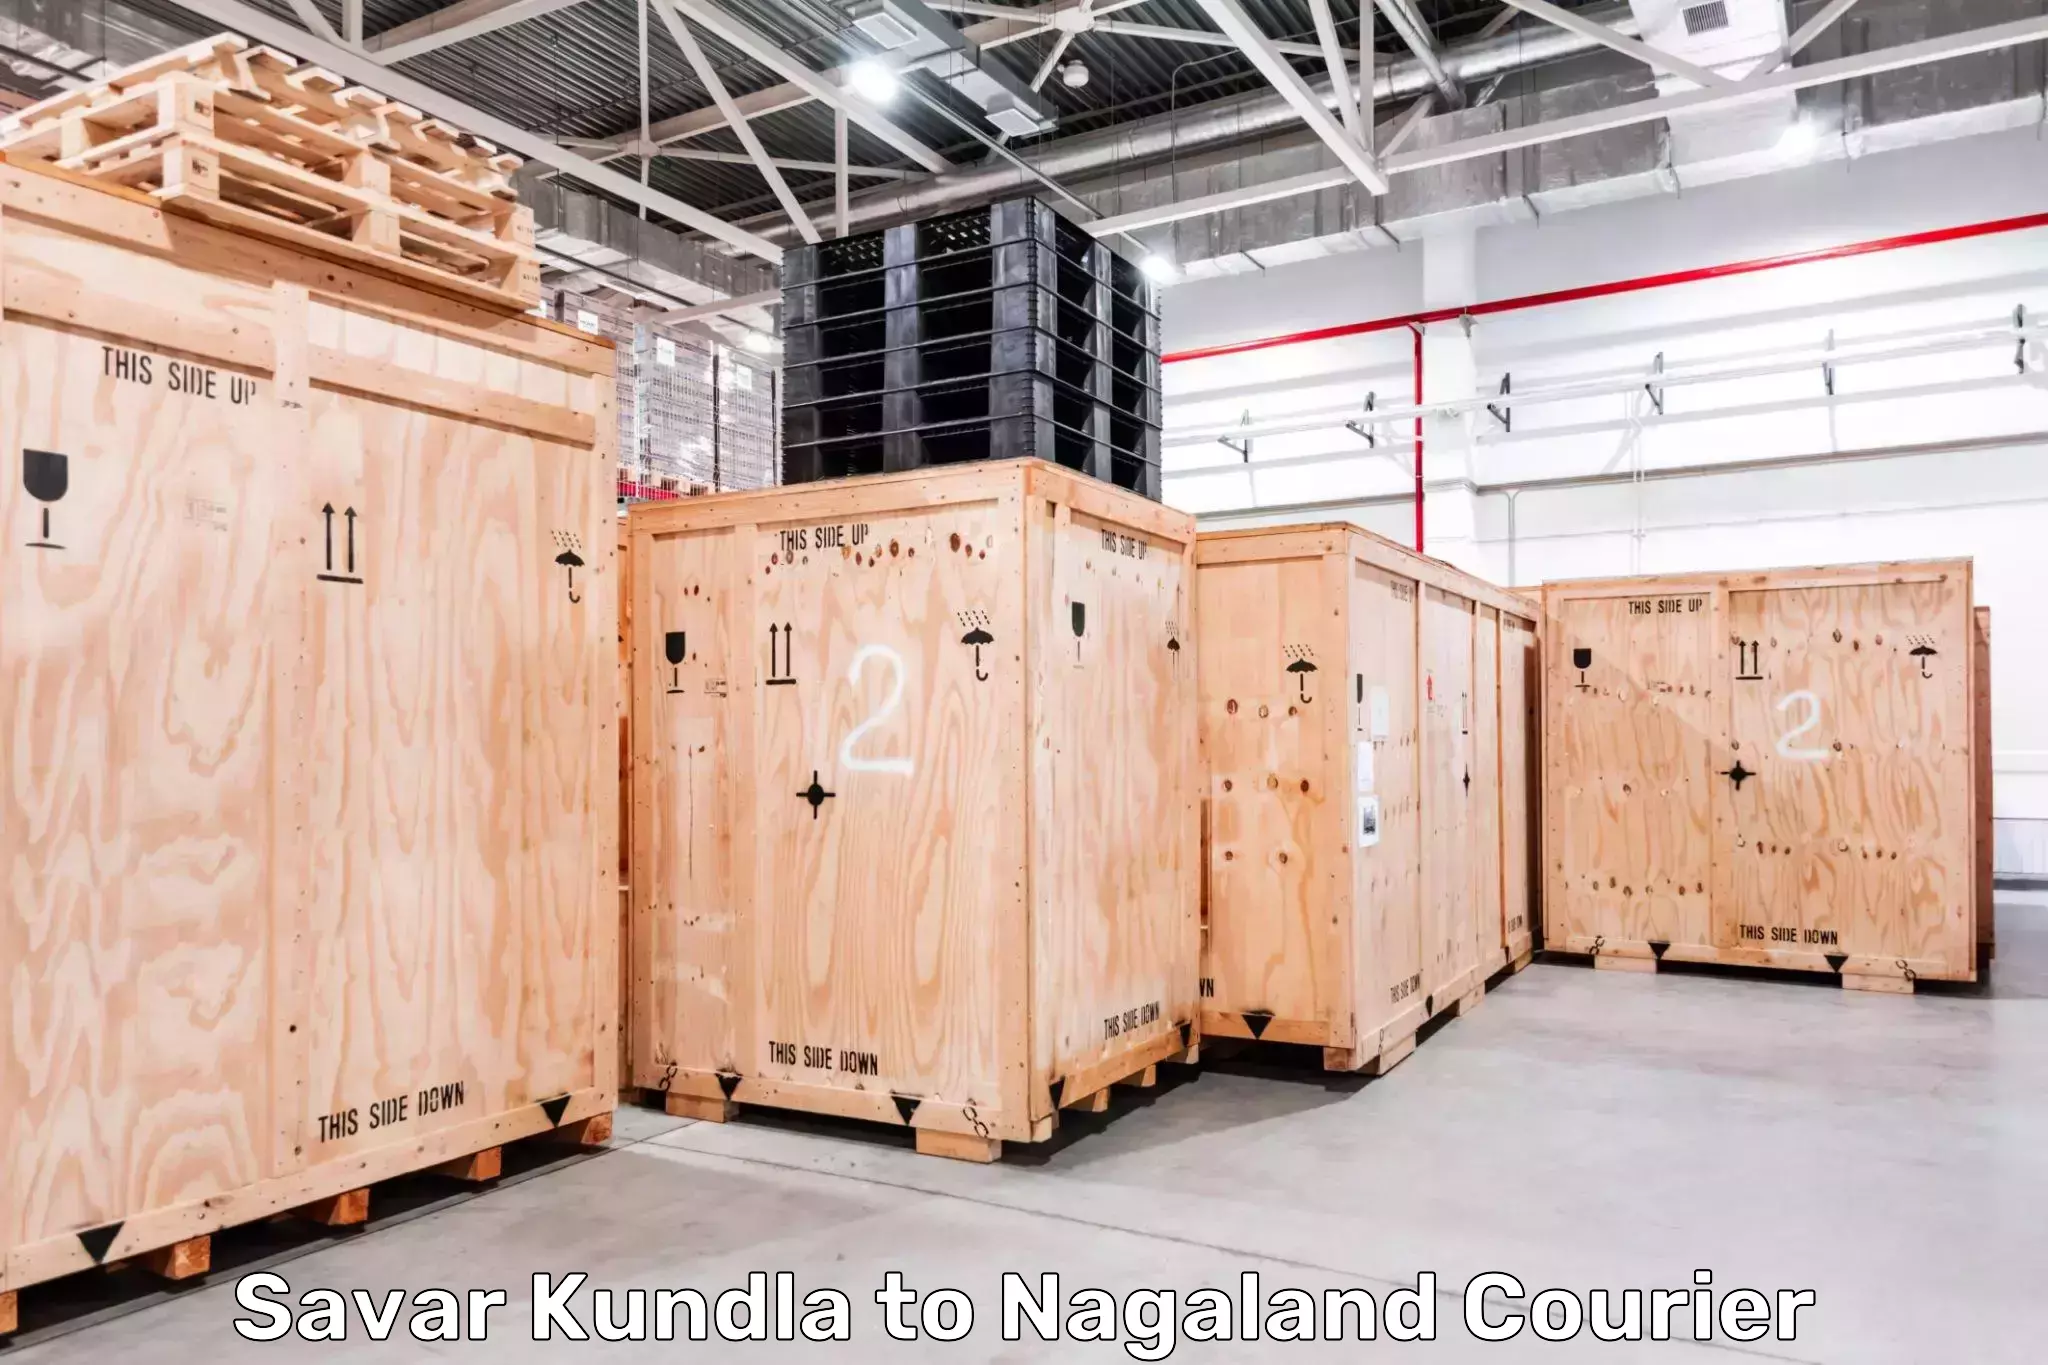 Courier service partnerships Savar Kundla to Nagaland